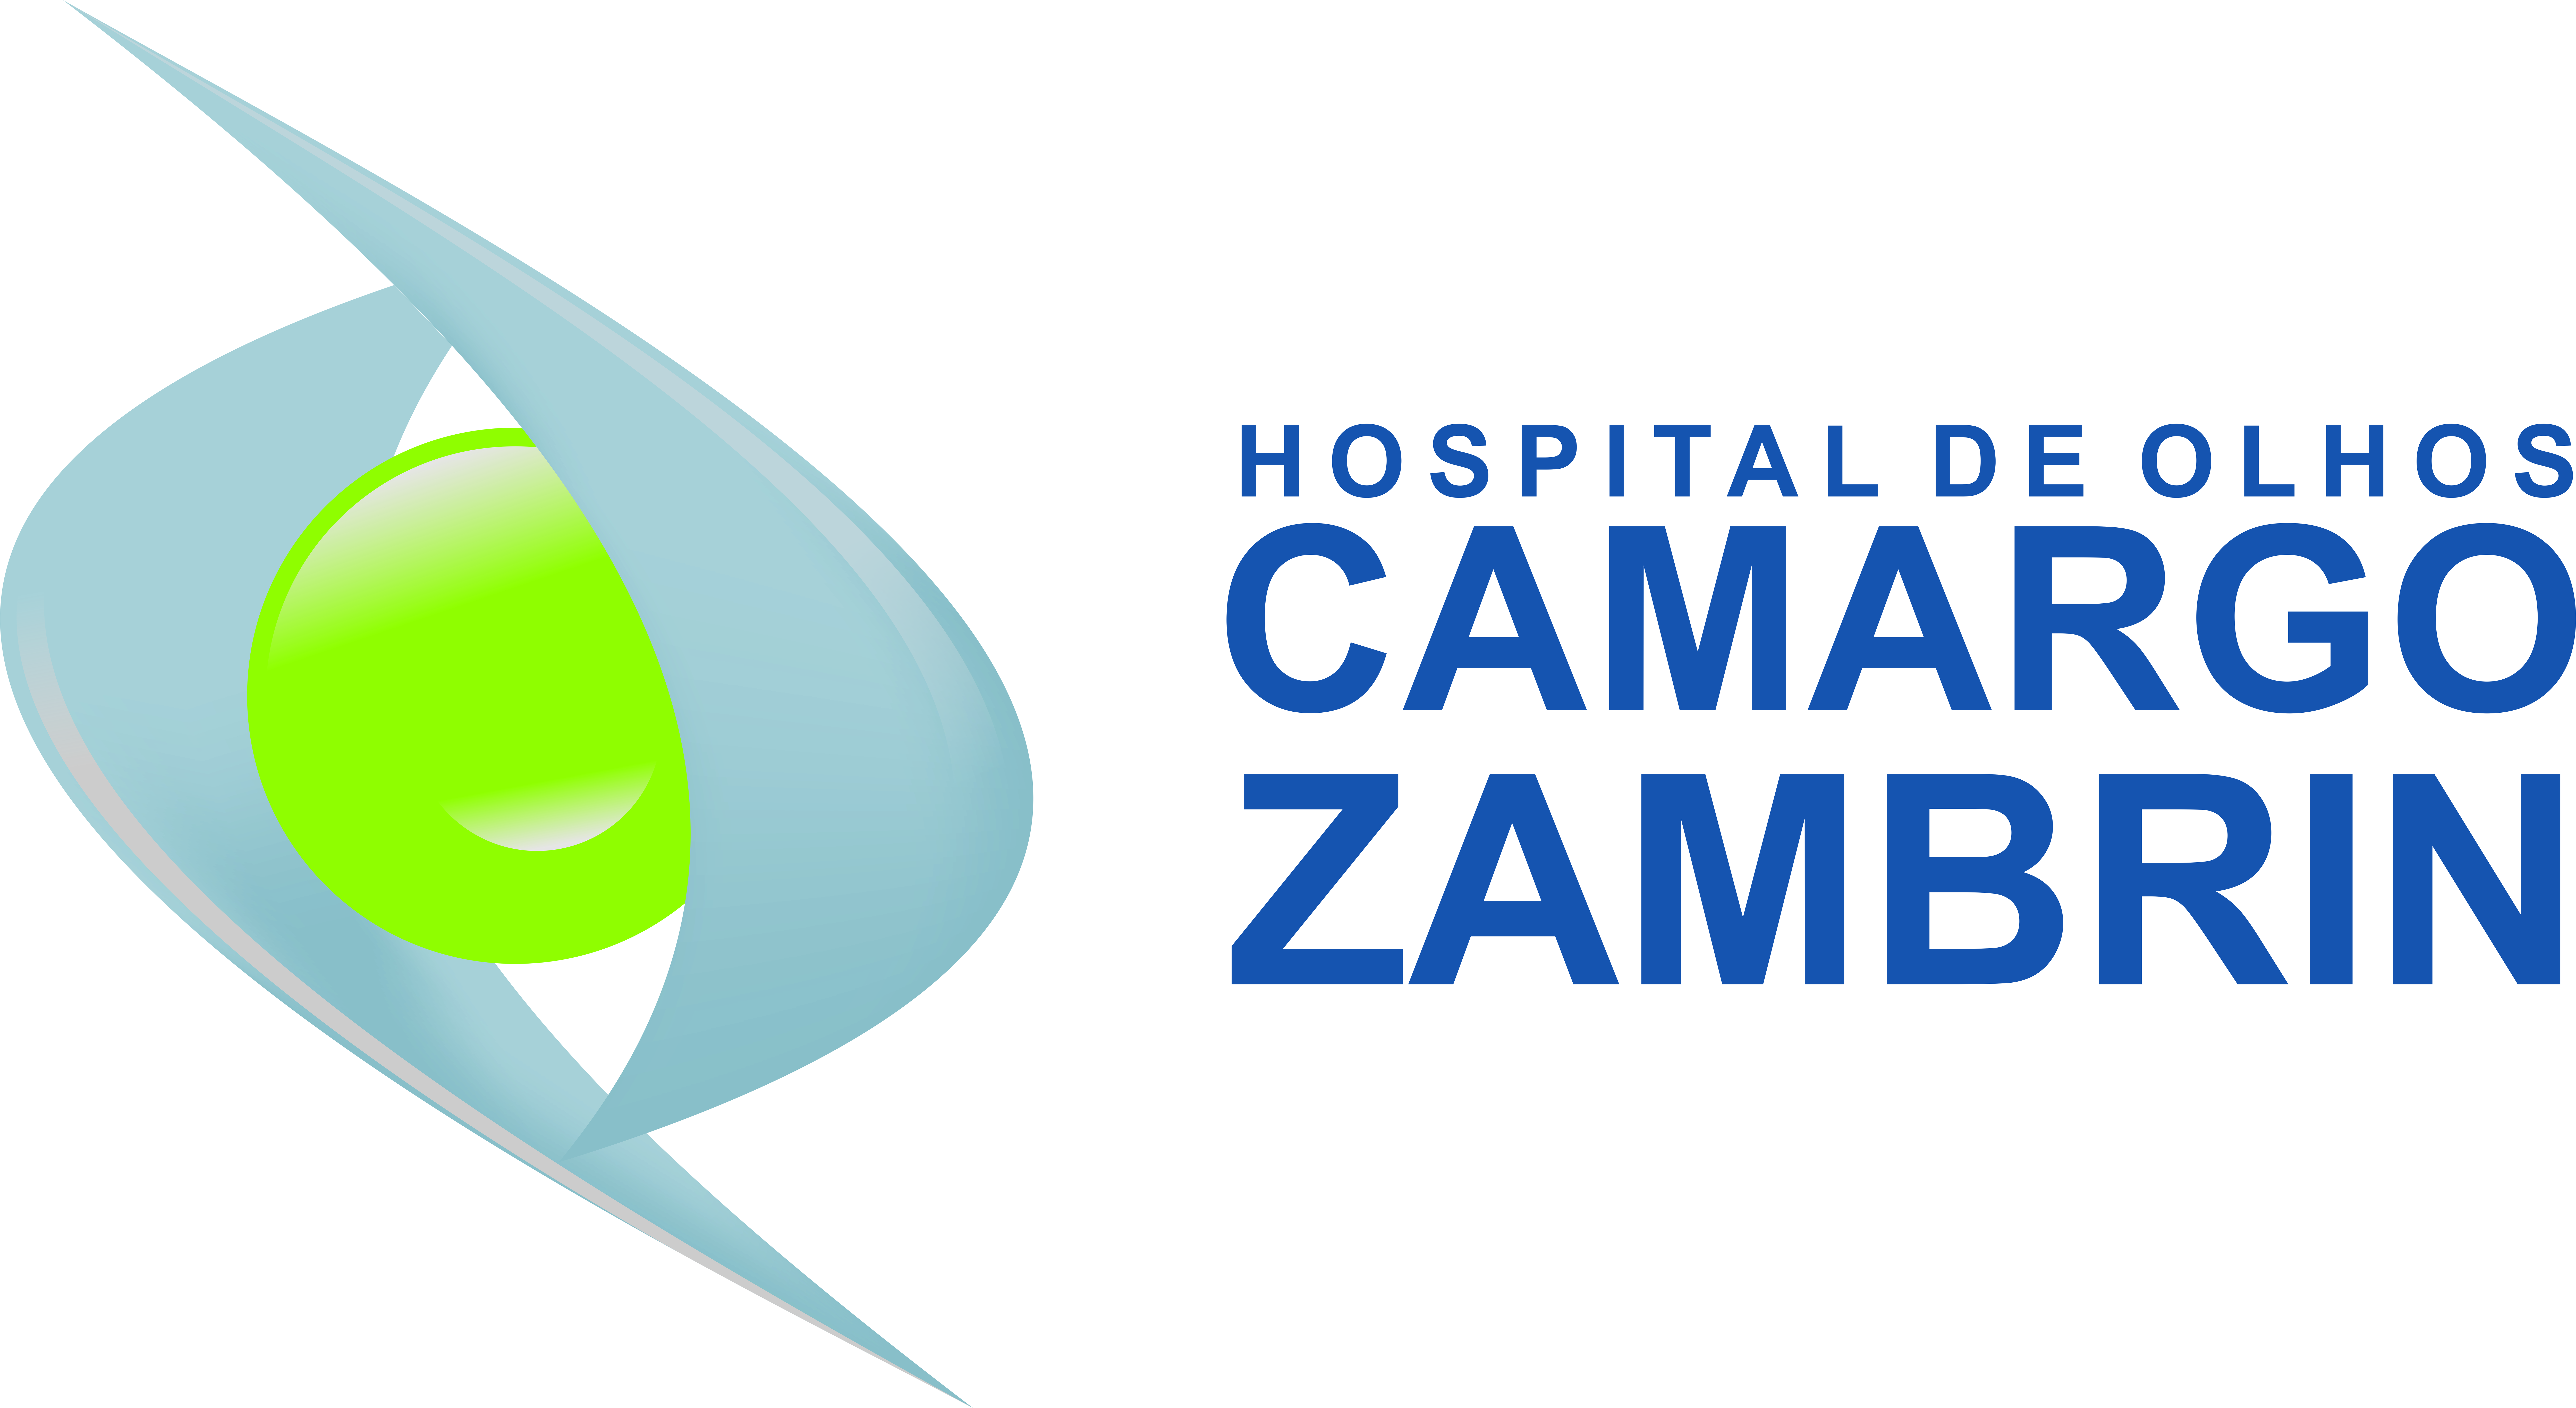 HOSPITAL DE OLHOS CAMARGO ZAMBRIN